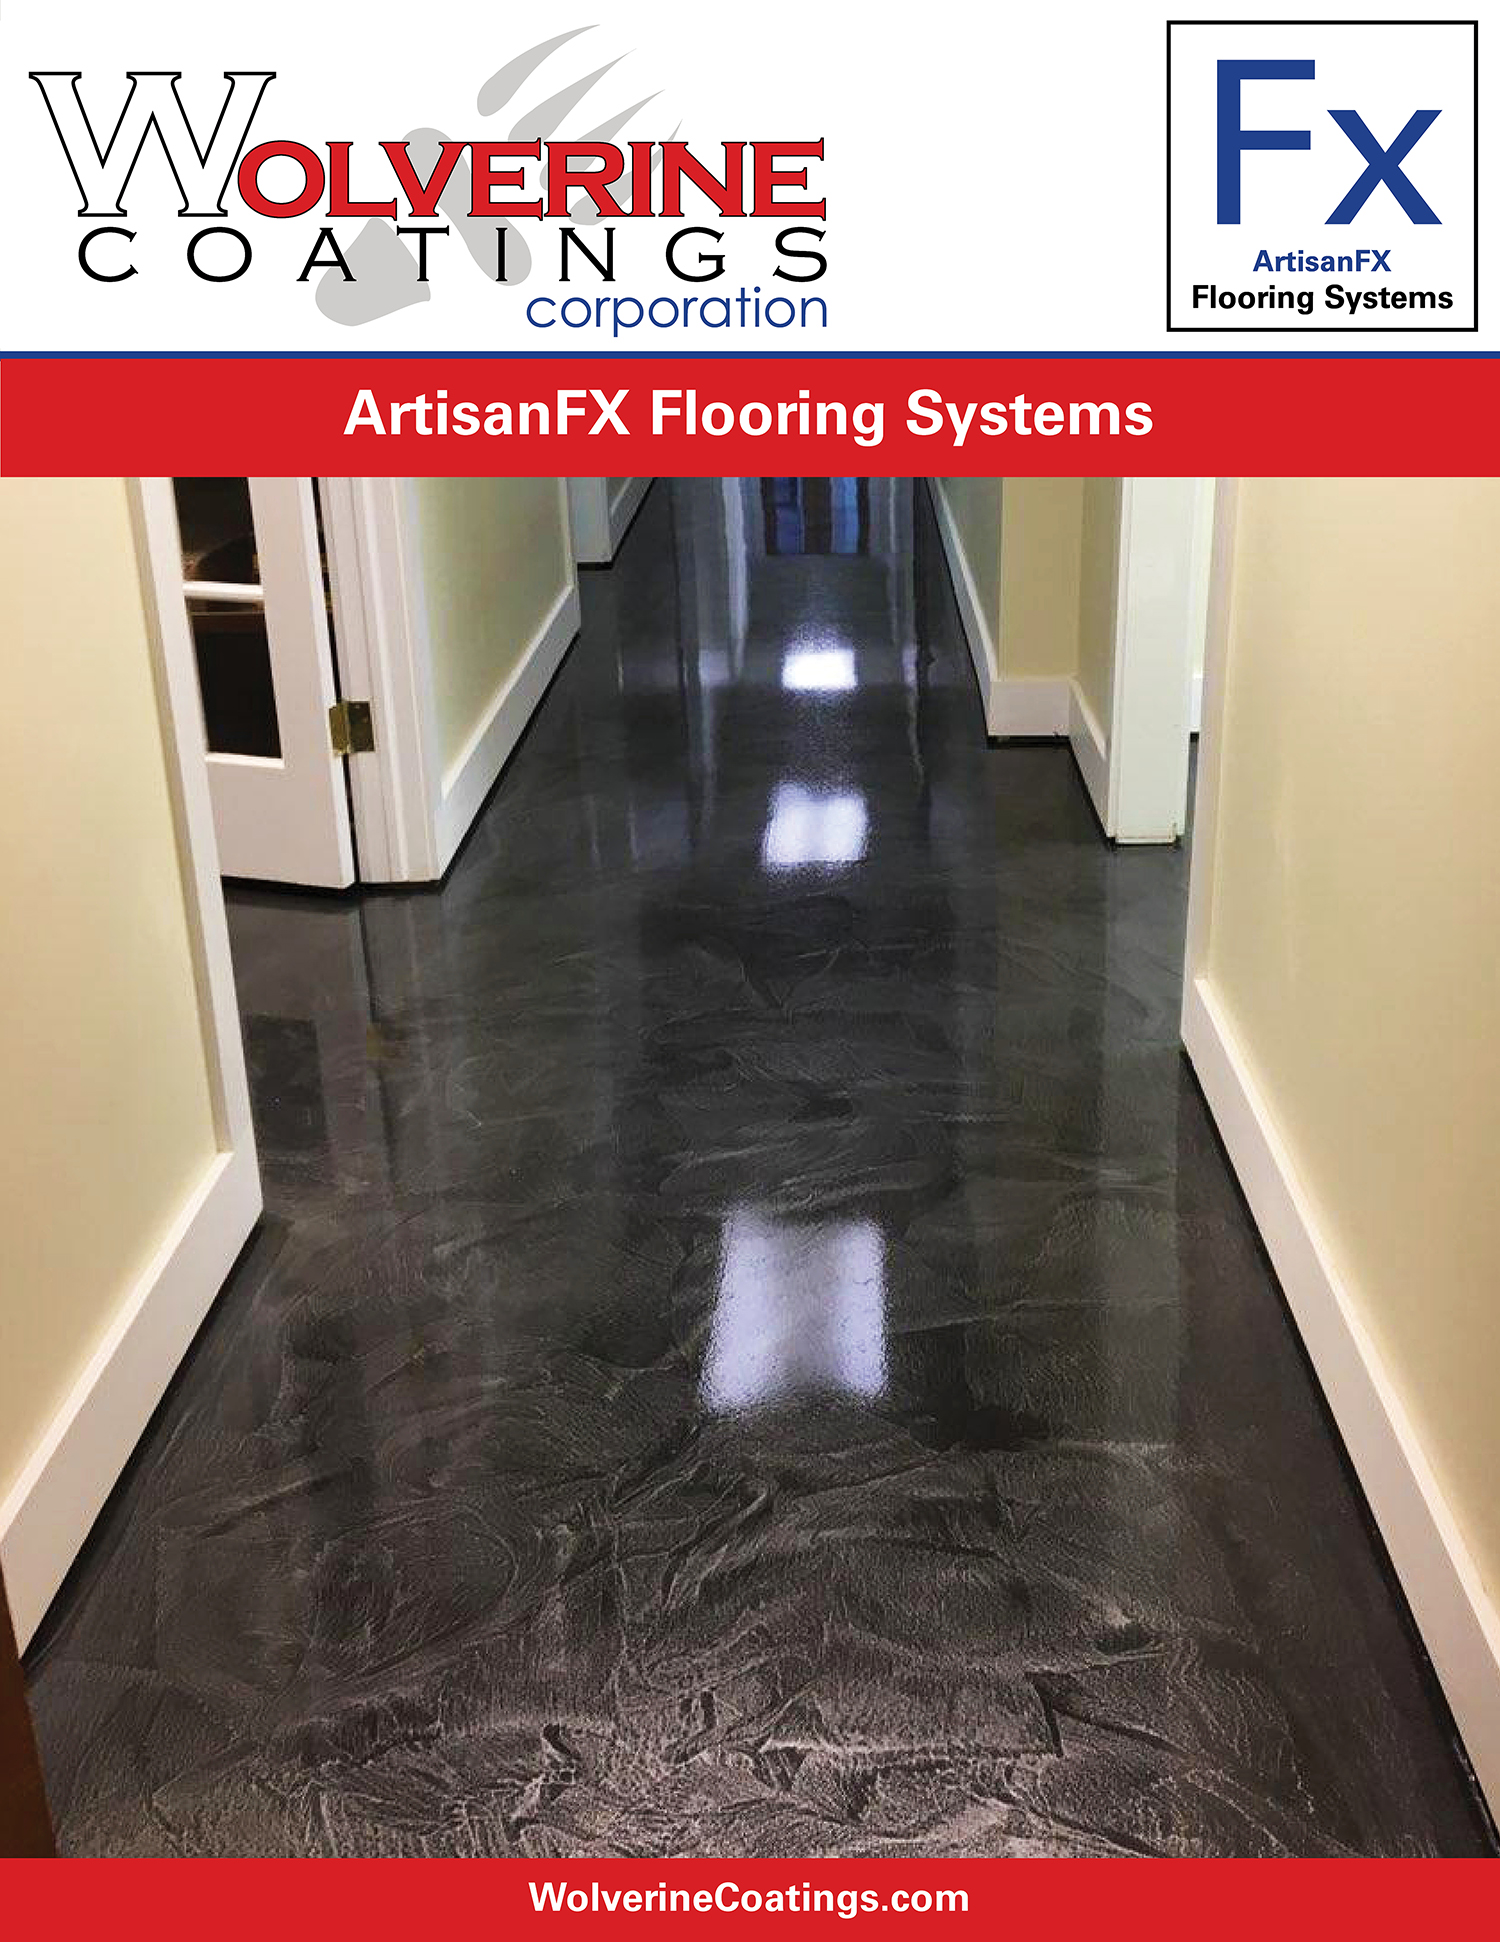 Metallic Flooring Systems - General Product Brochures - Wolverine Coatings Corporation: Coatings Manufacturer, Spartanburg, SC